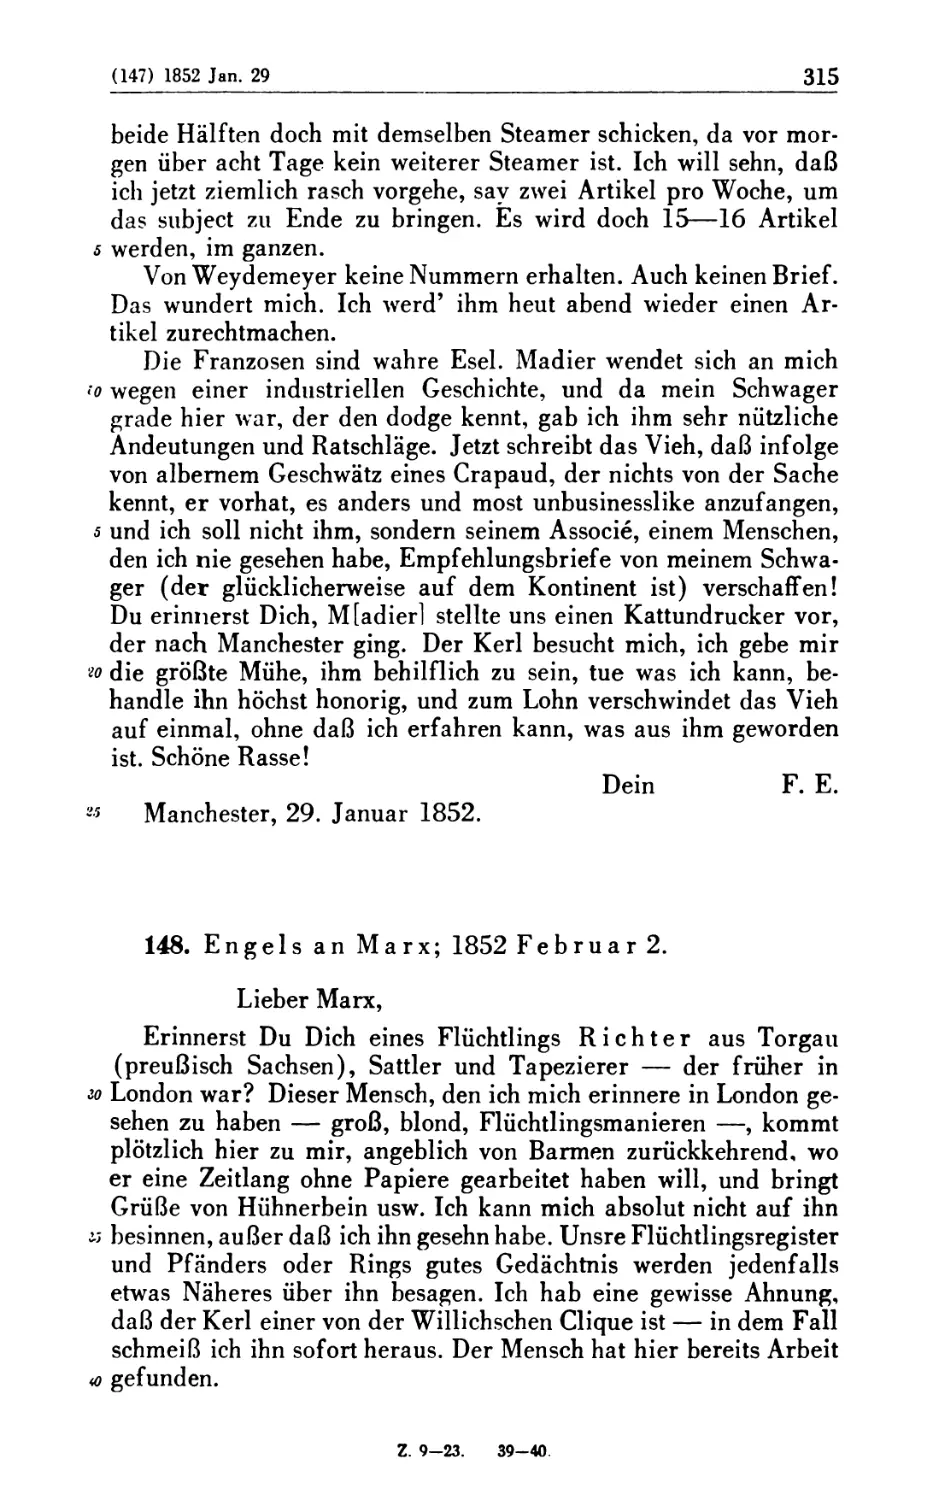 148. Engels an Marx; 1852 Februar 2